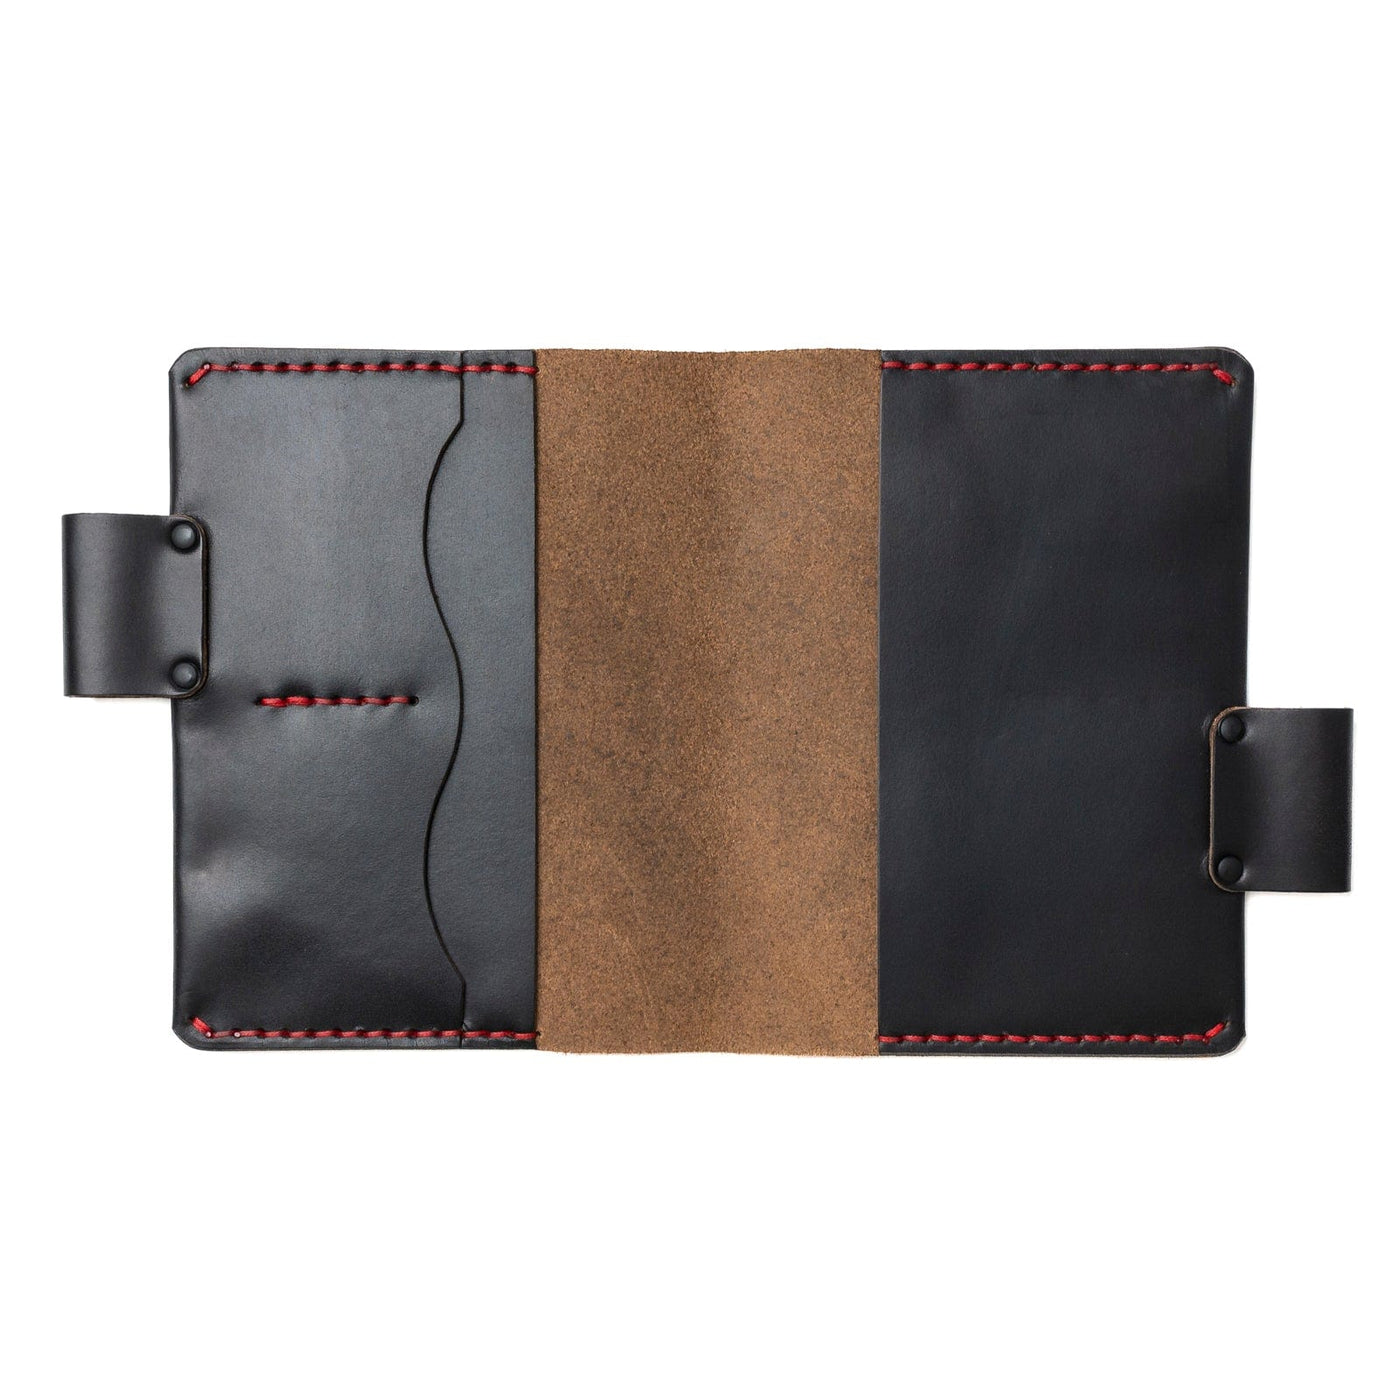 Leather Hobonichi Techo Planner Cover - Black Popov Leather